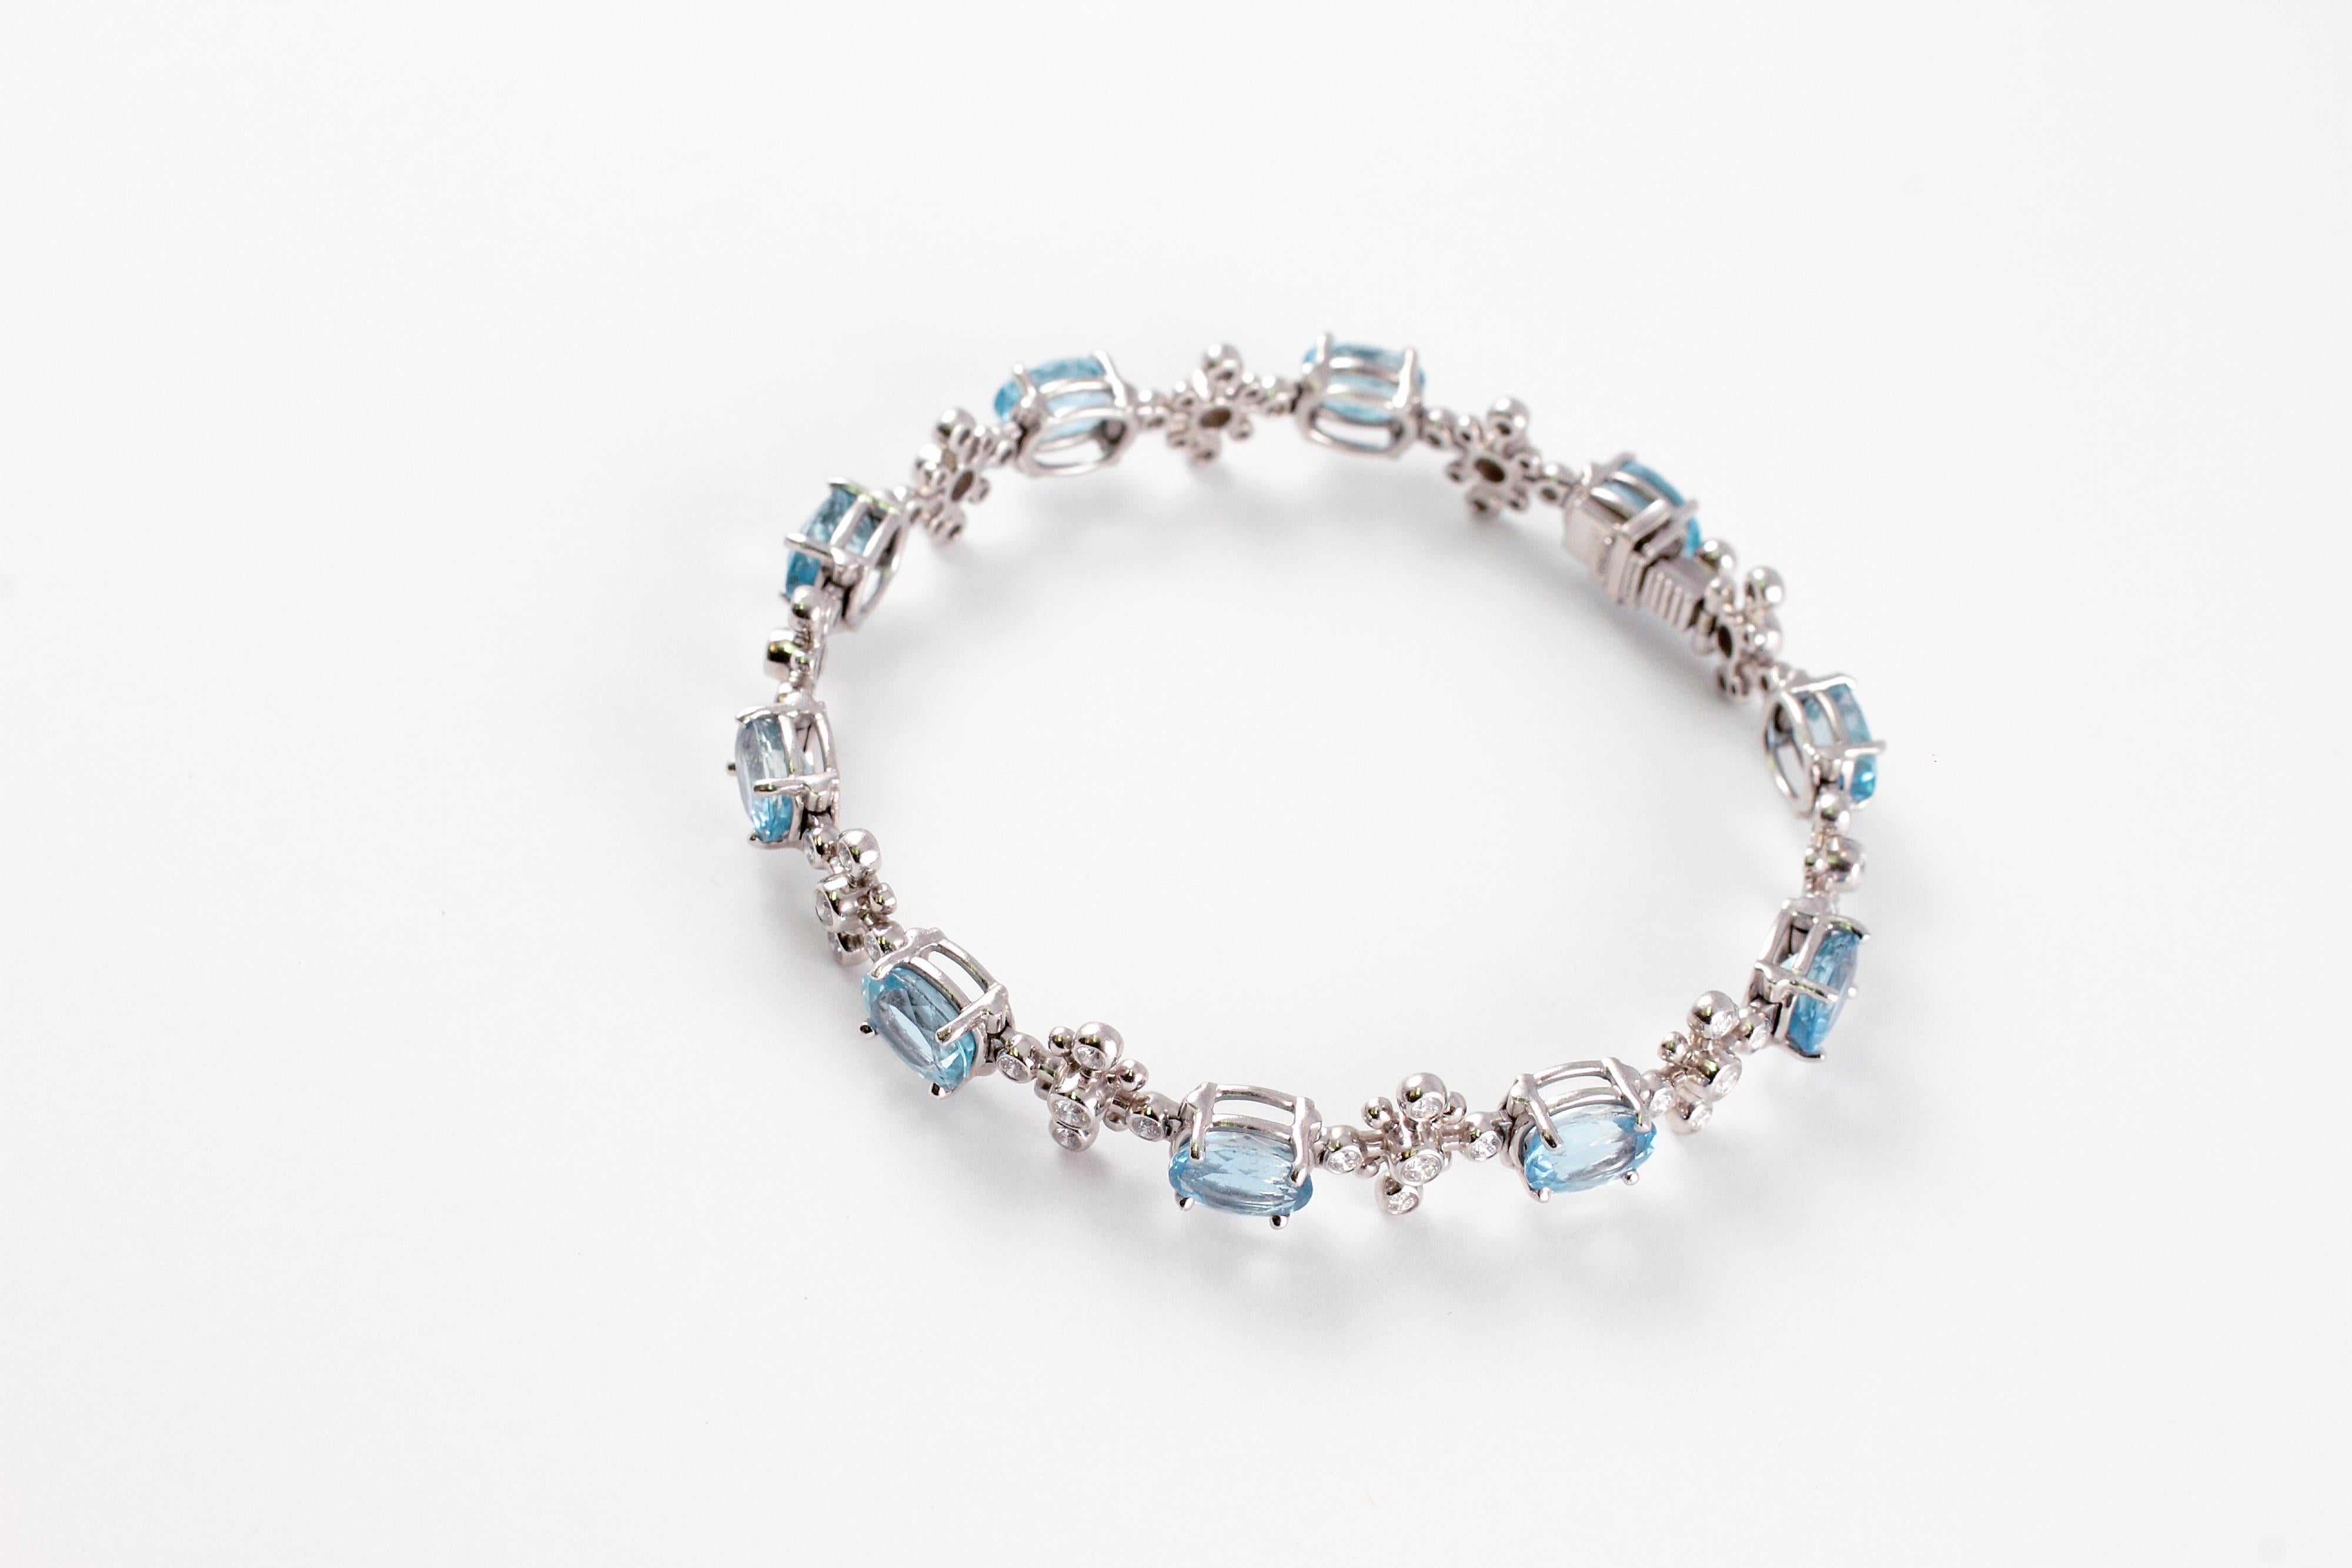 Tiffany & Co. Aquamarine Diamond Bracelet from the 